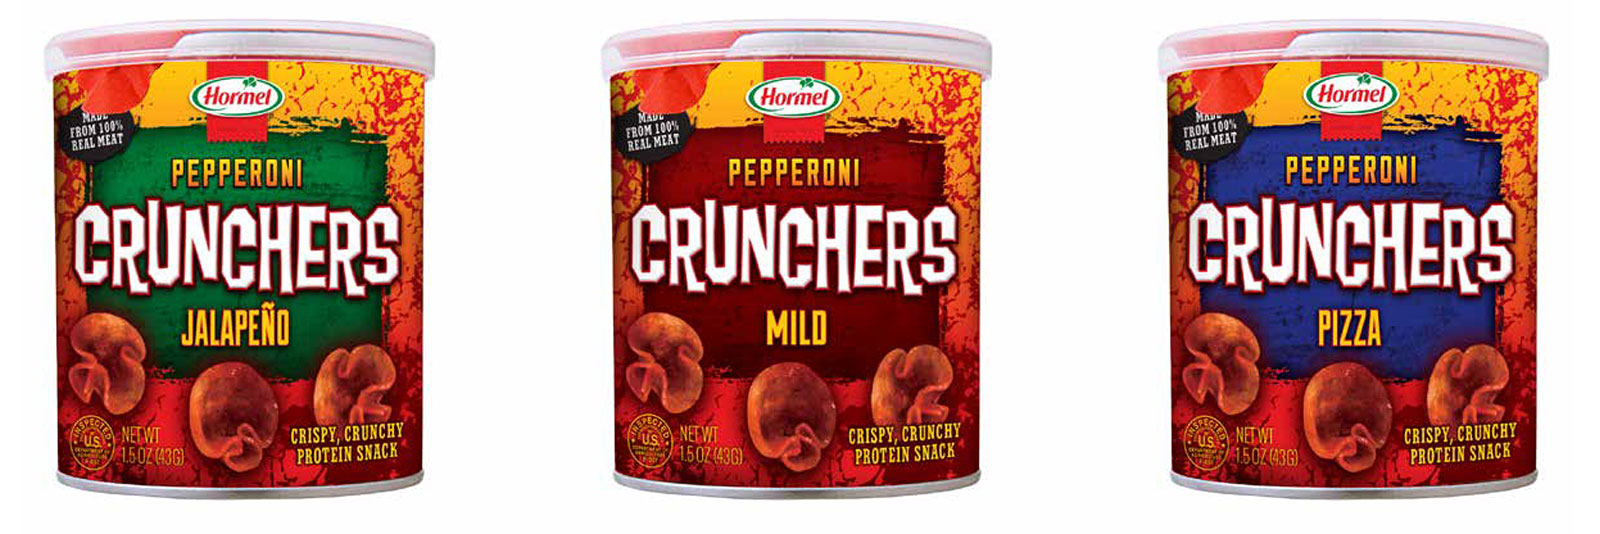 Hormel Pepperoni Crunchers